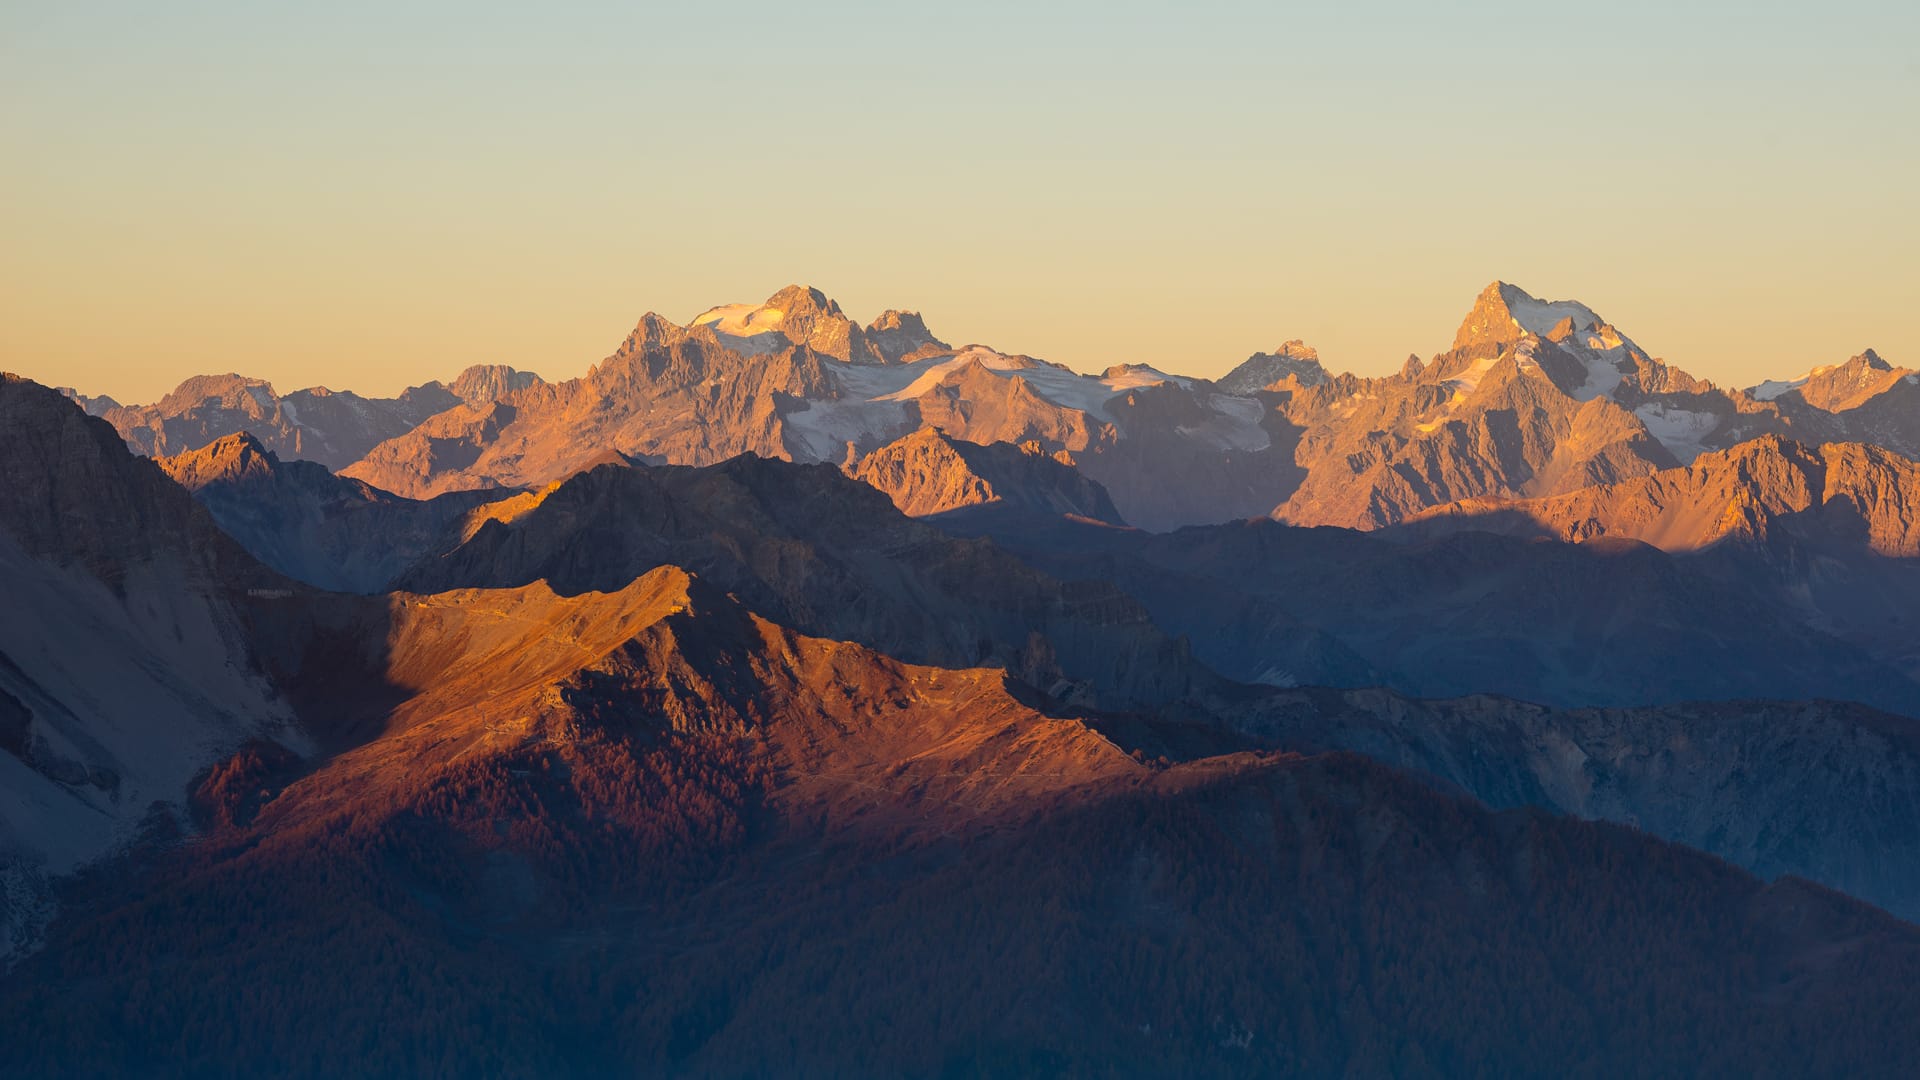 Mountain peaks with glaciers massif des ecrins national park france